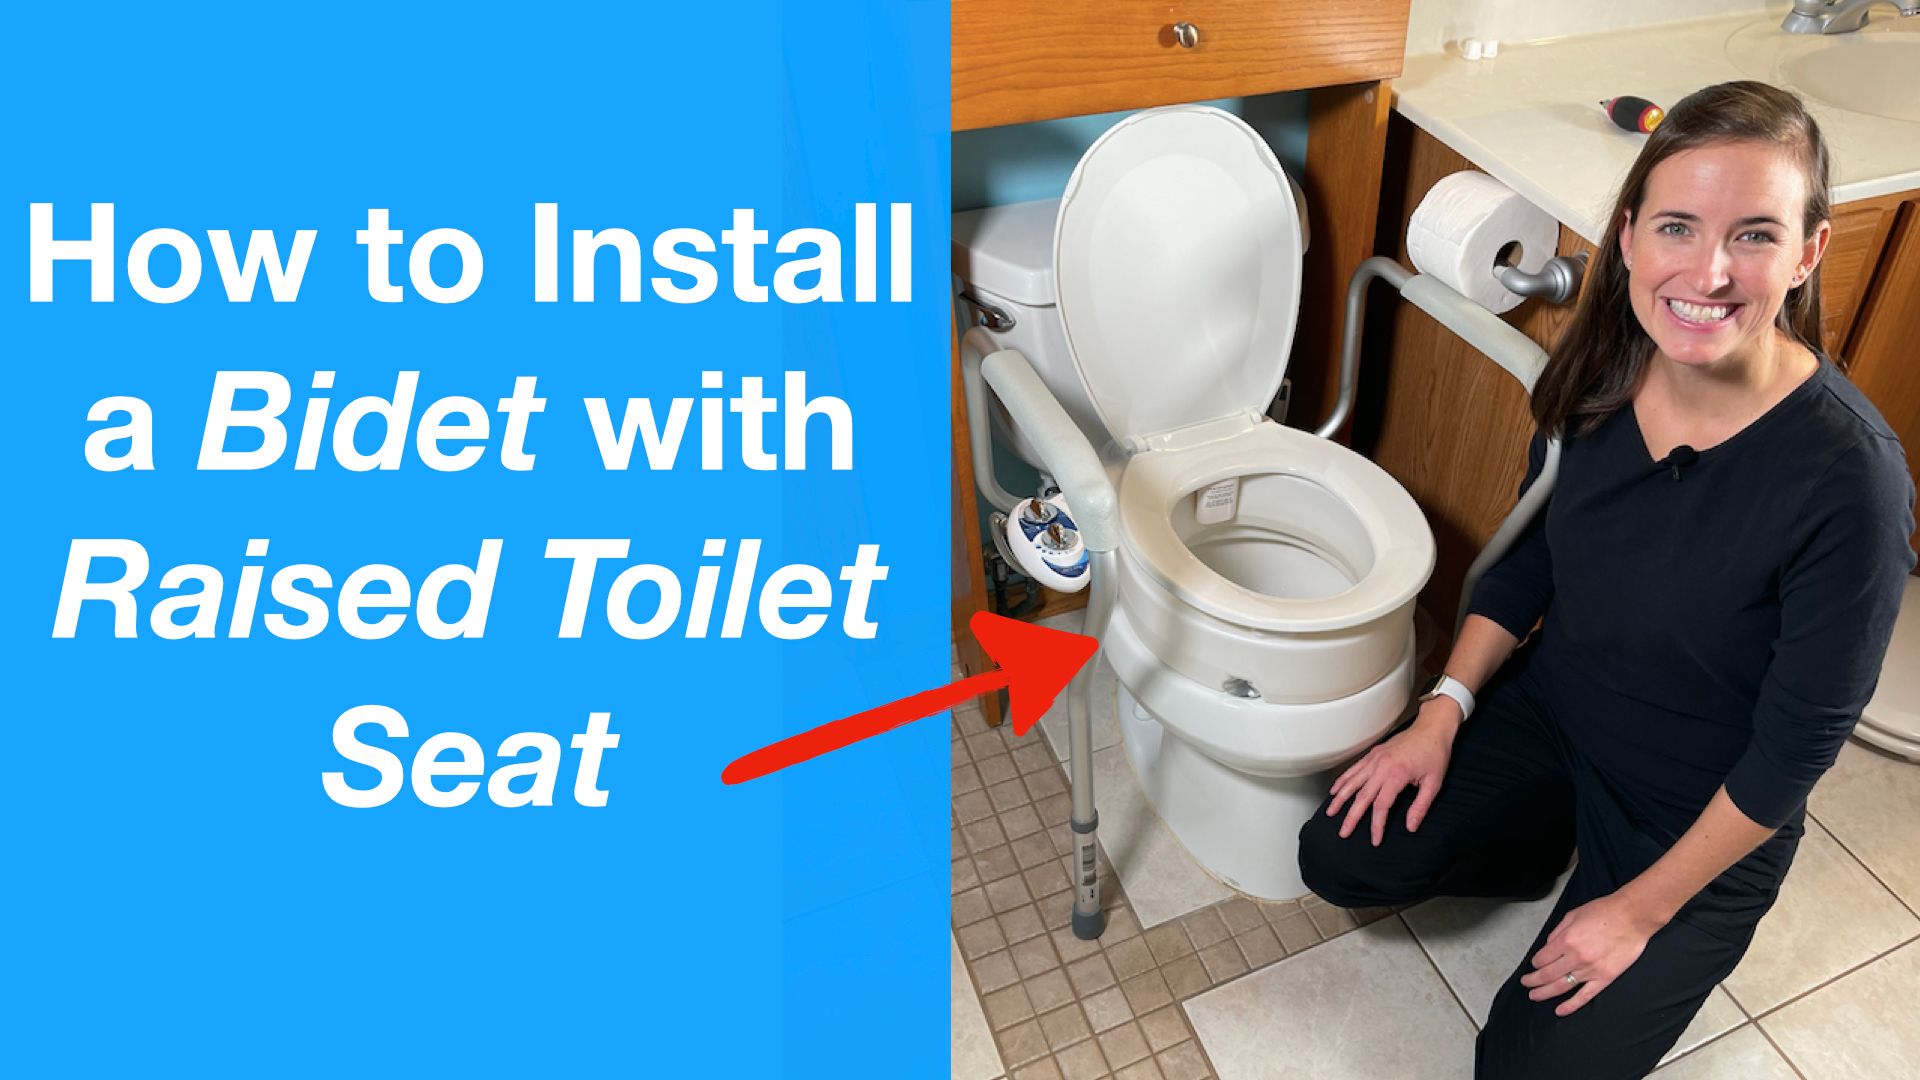 https://www.equipmeot.com/contents/uploads/2021/02/Raised-Toilet-Seat-Bidet-Thumbnail.001.jpeg